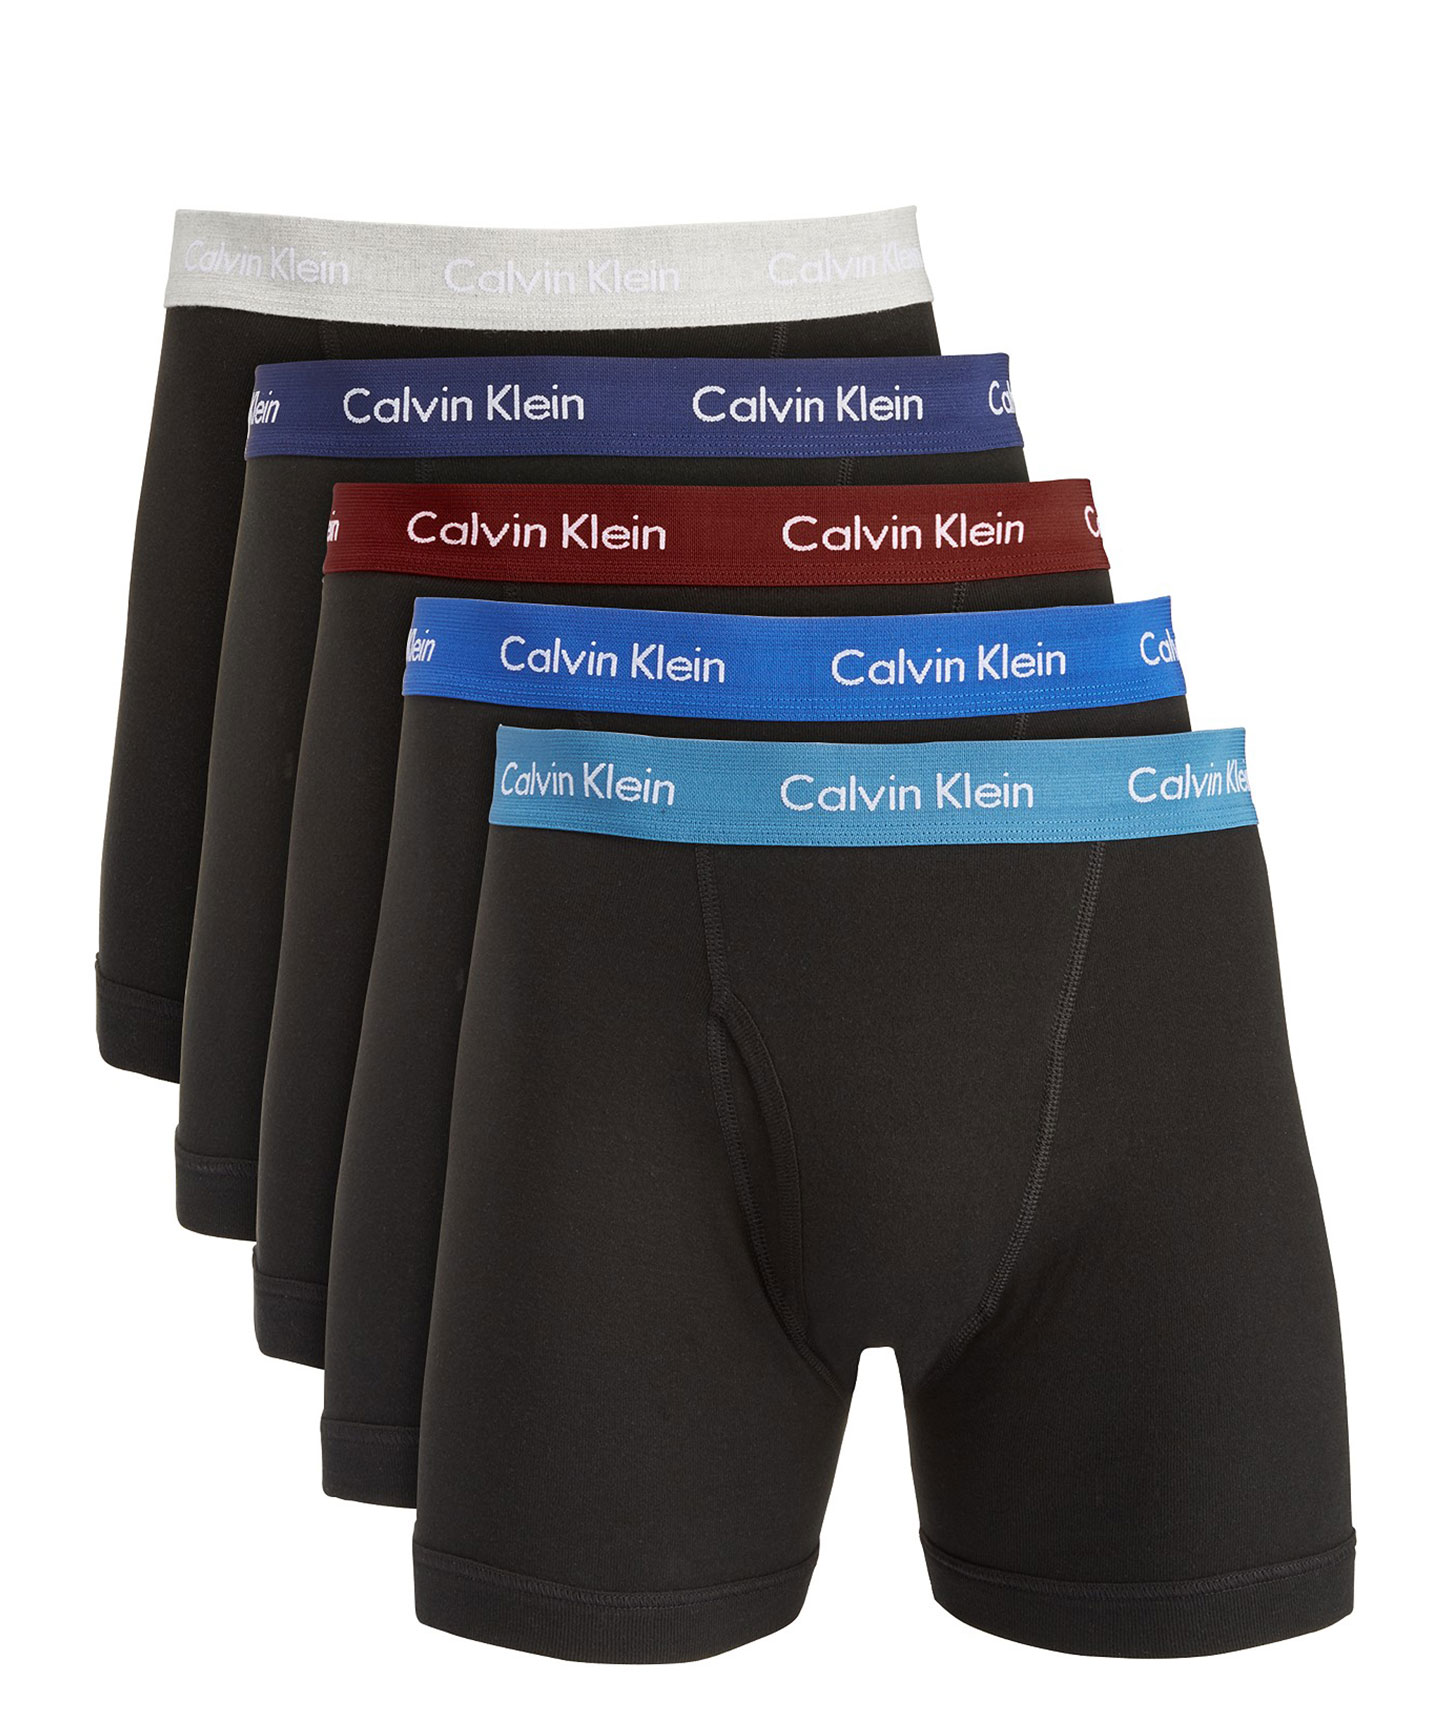 Комплект трусов Calvin Klein (5 штук)